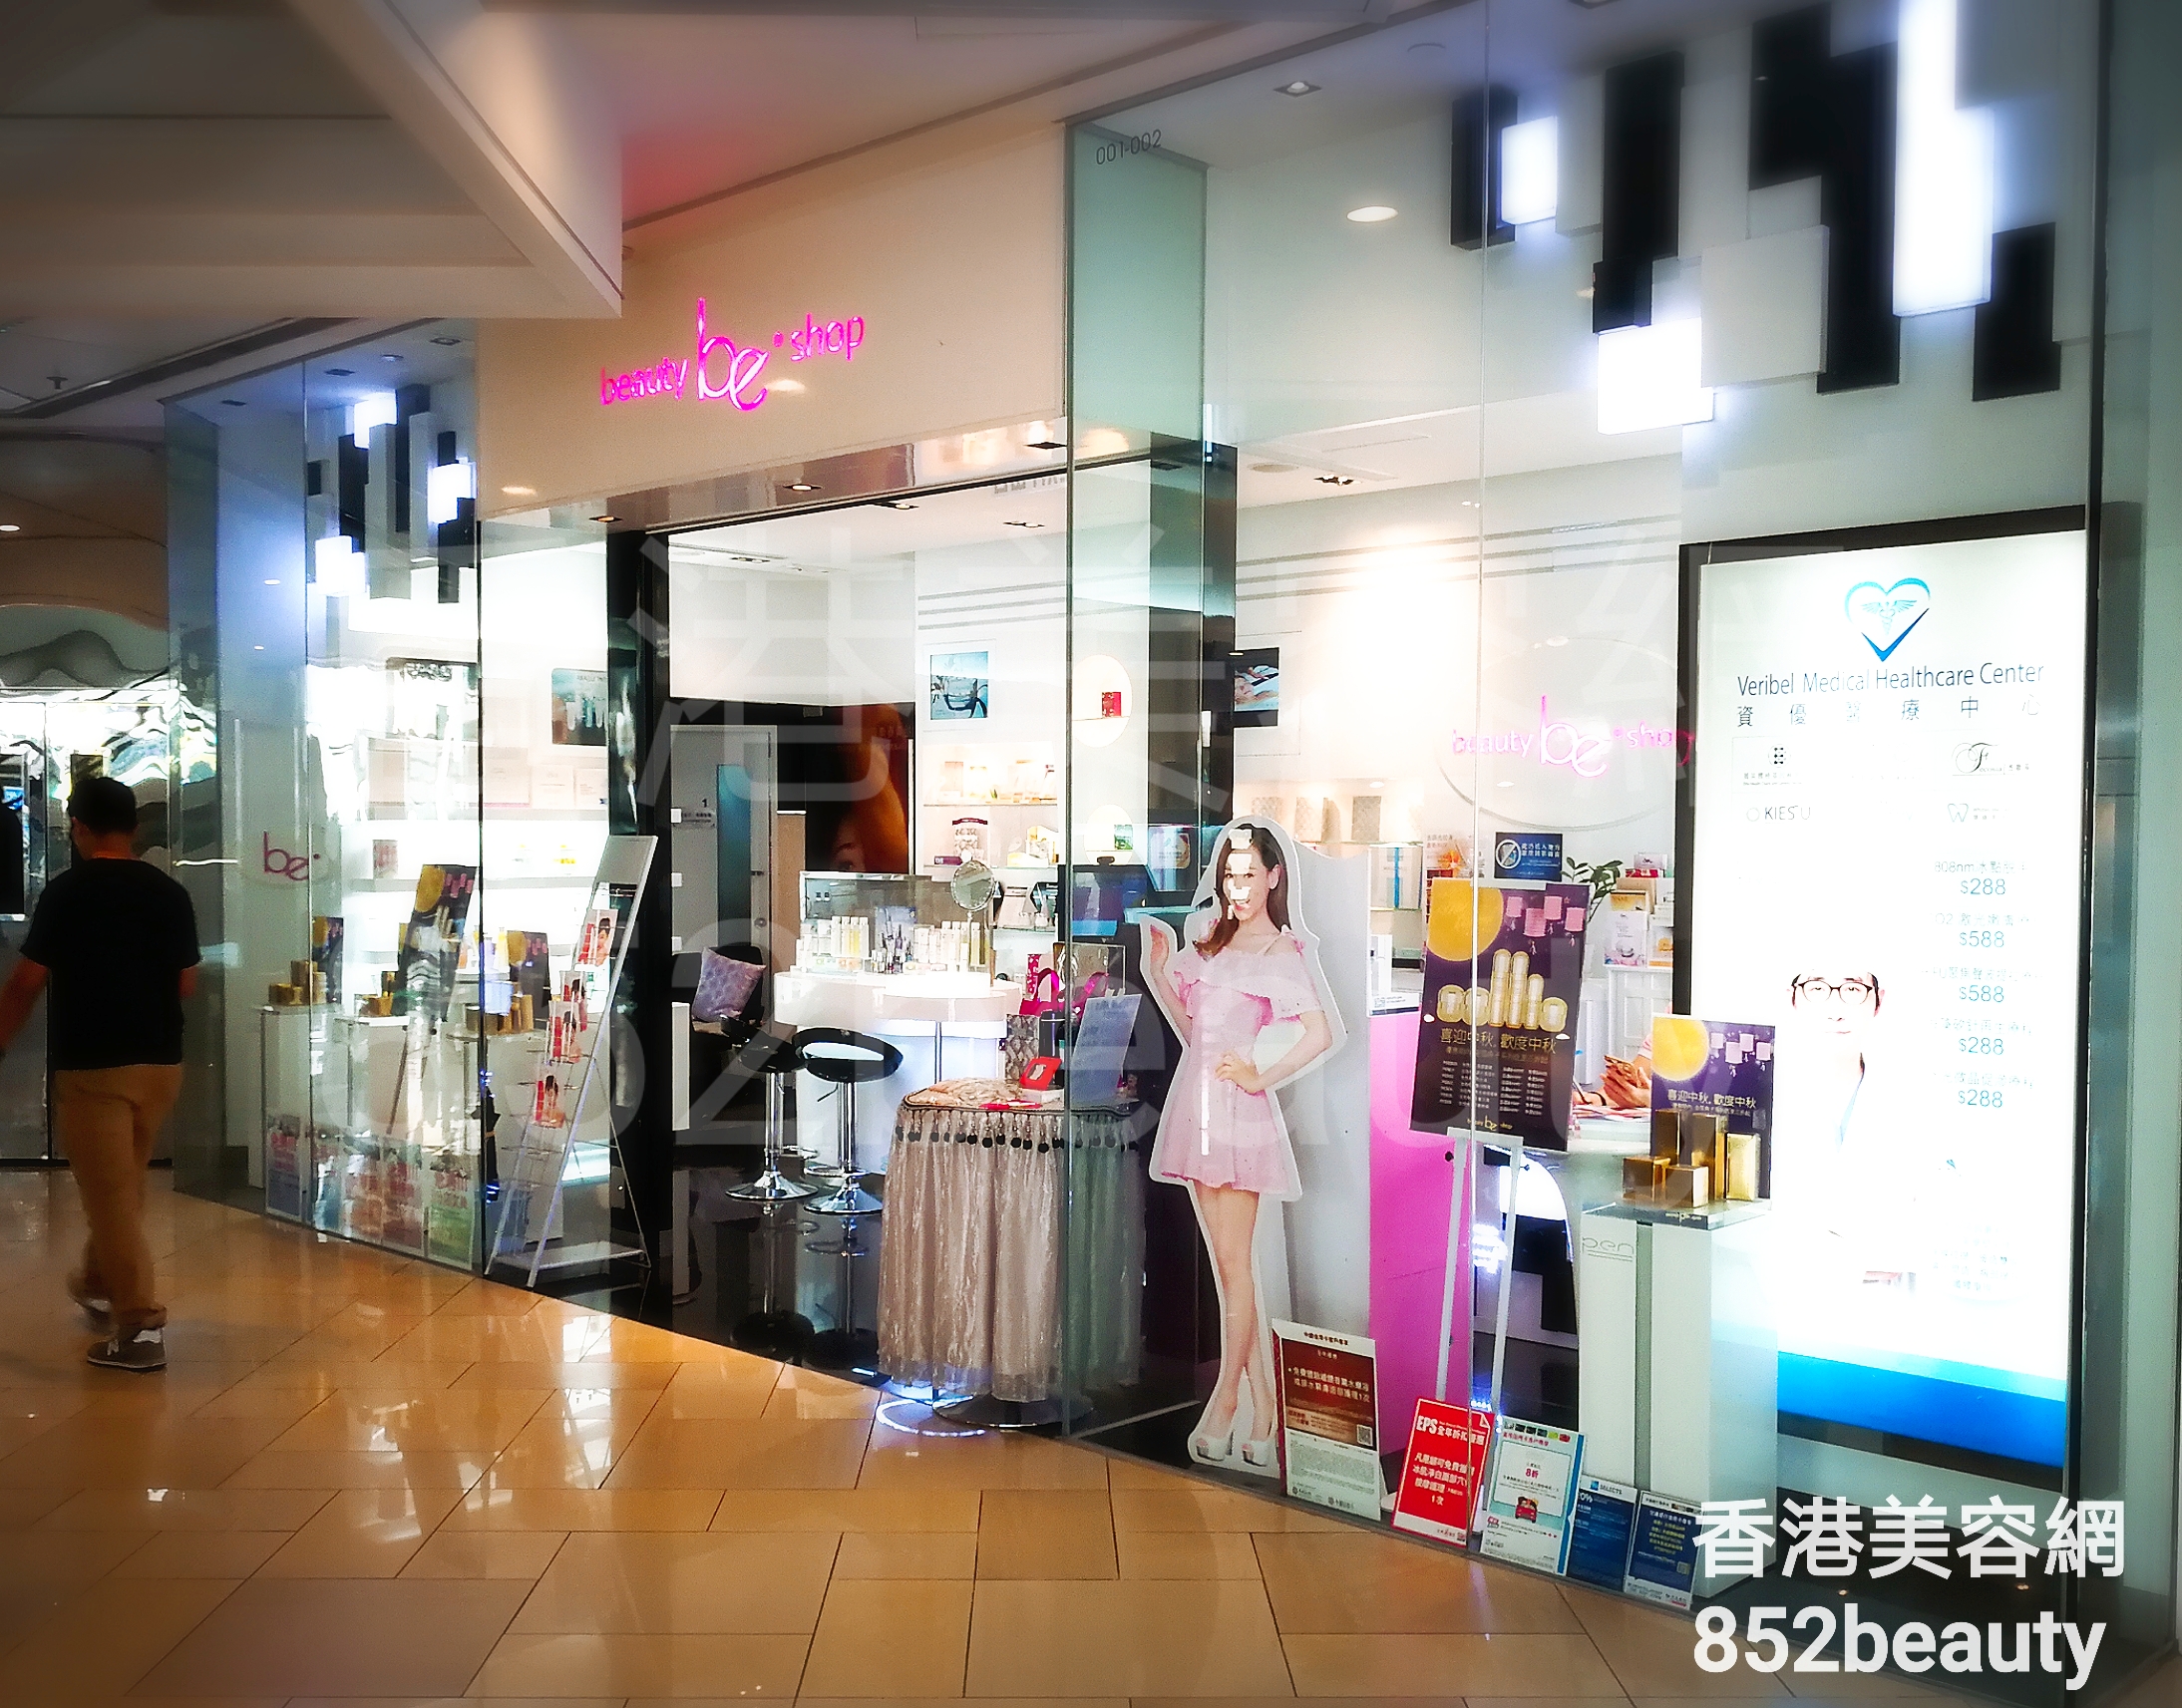 Facial Care: be beauty shop (港運城)